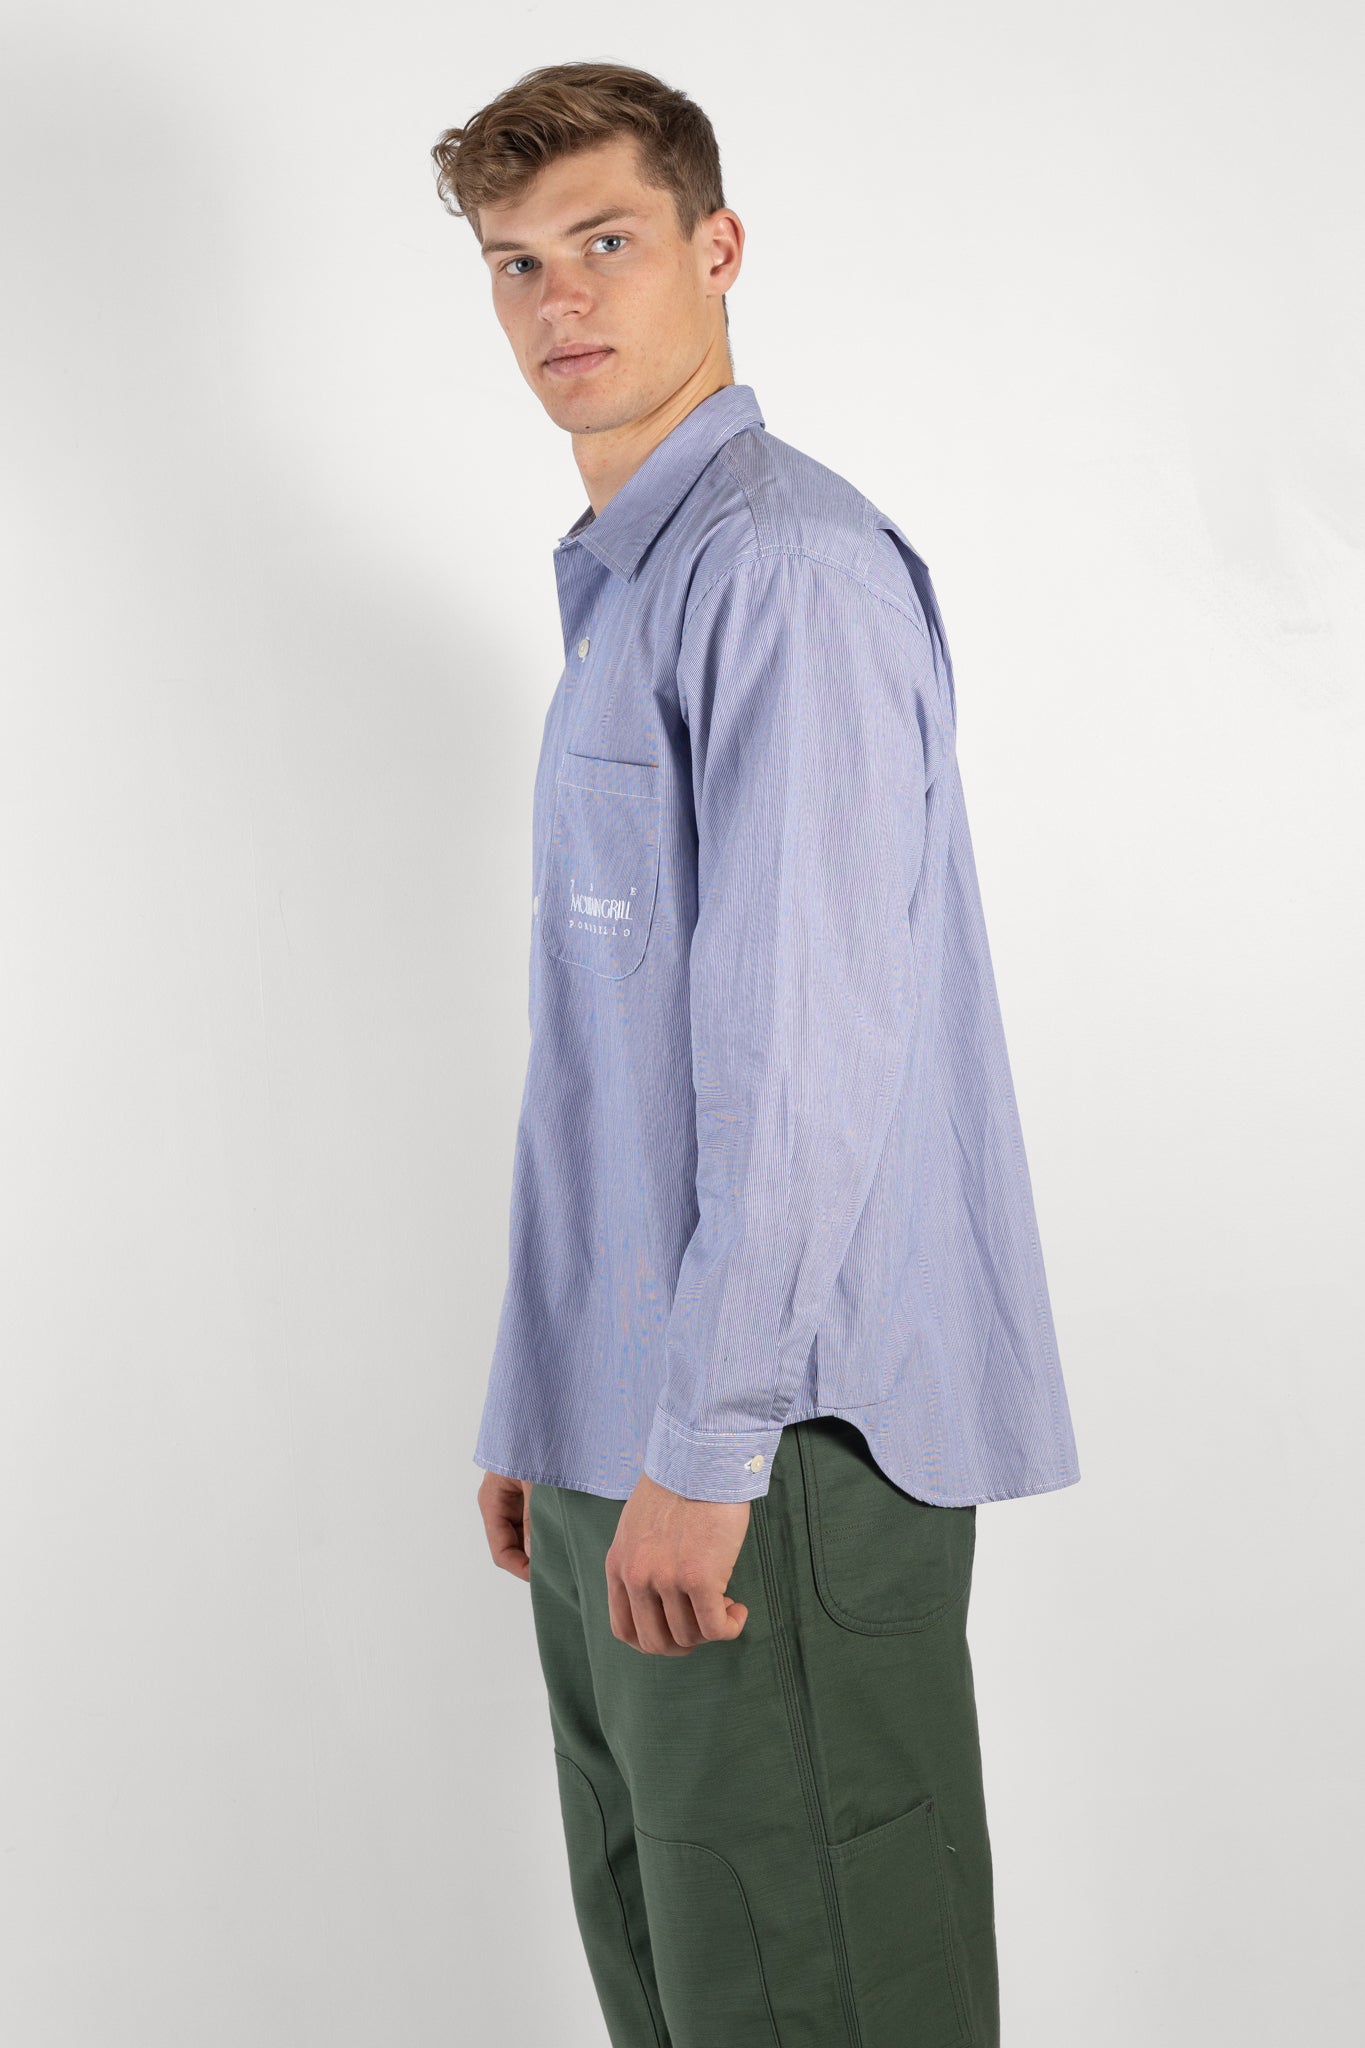 Mens Shirt | Garbstore embroidered Grande shirt | The Standard Store